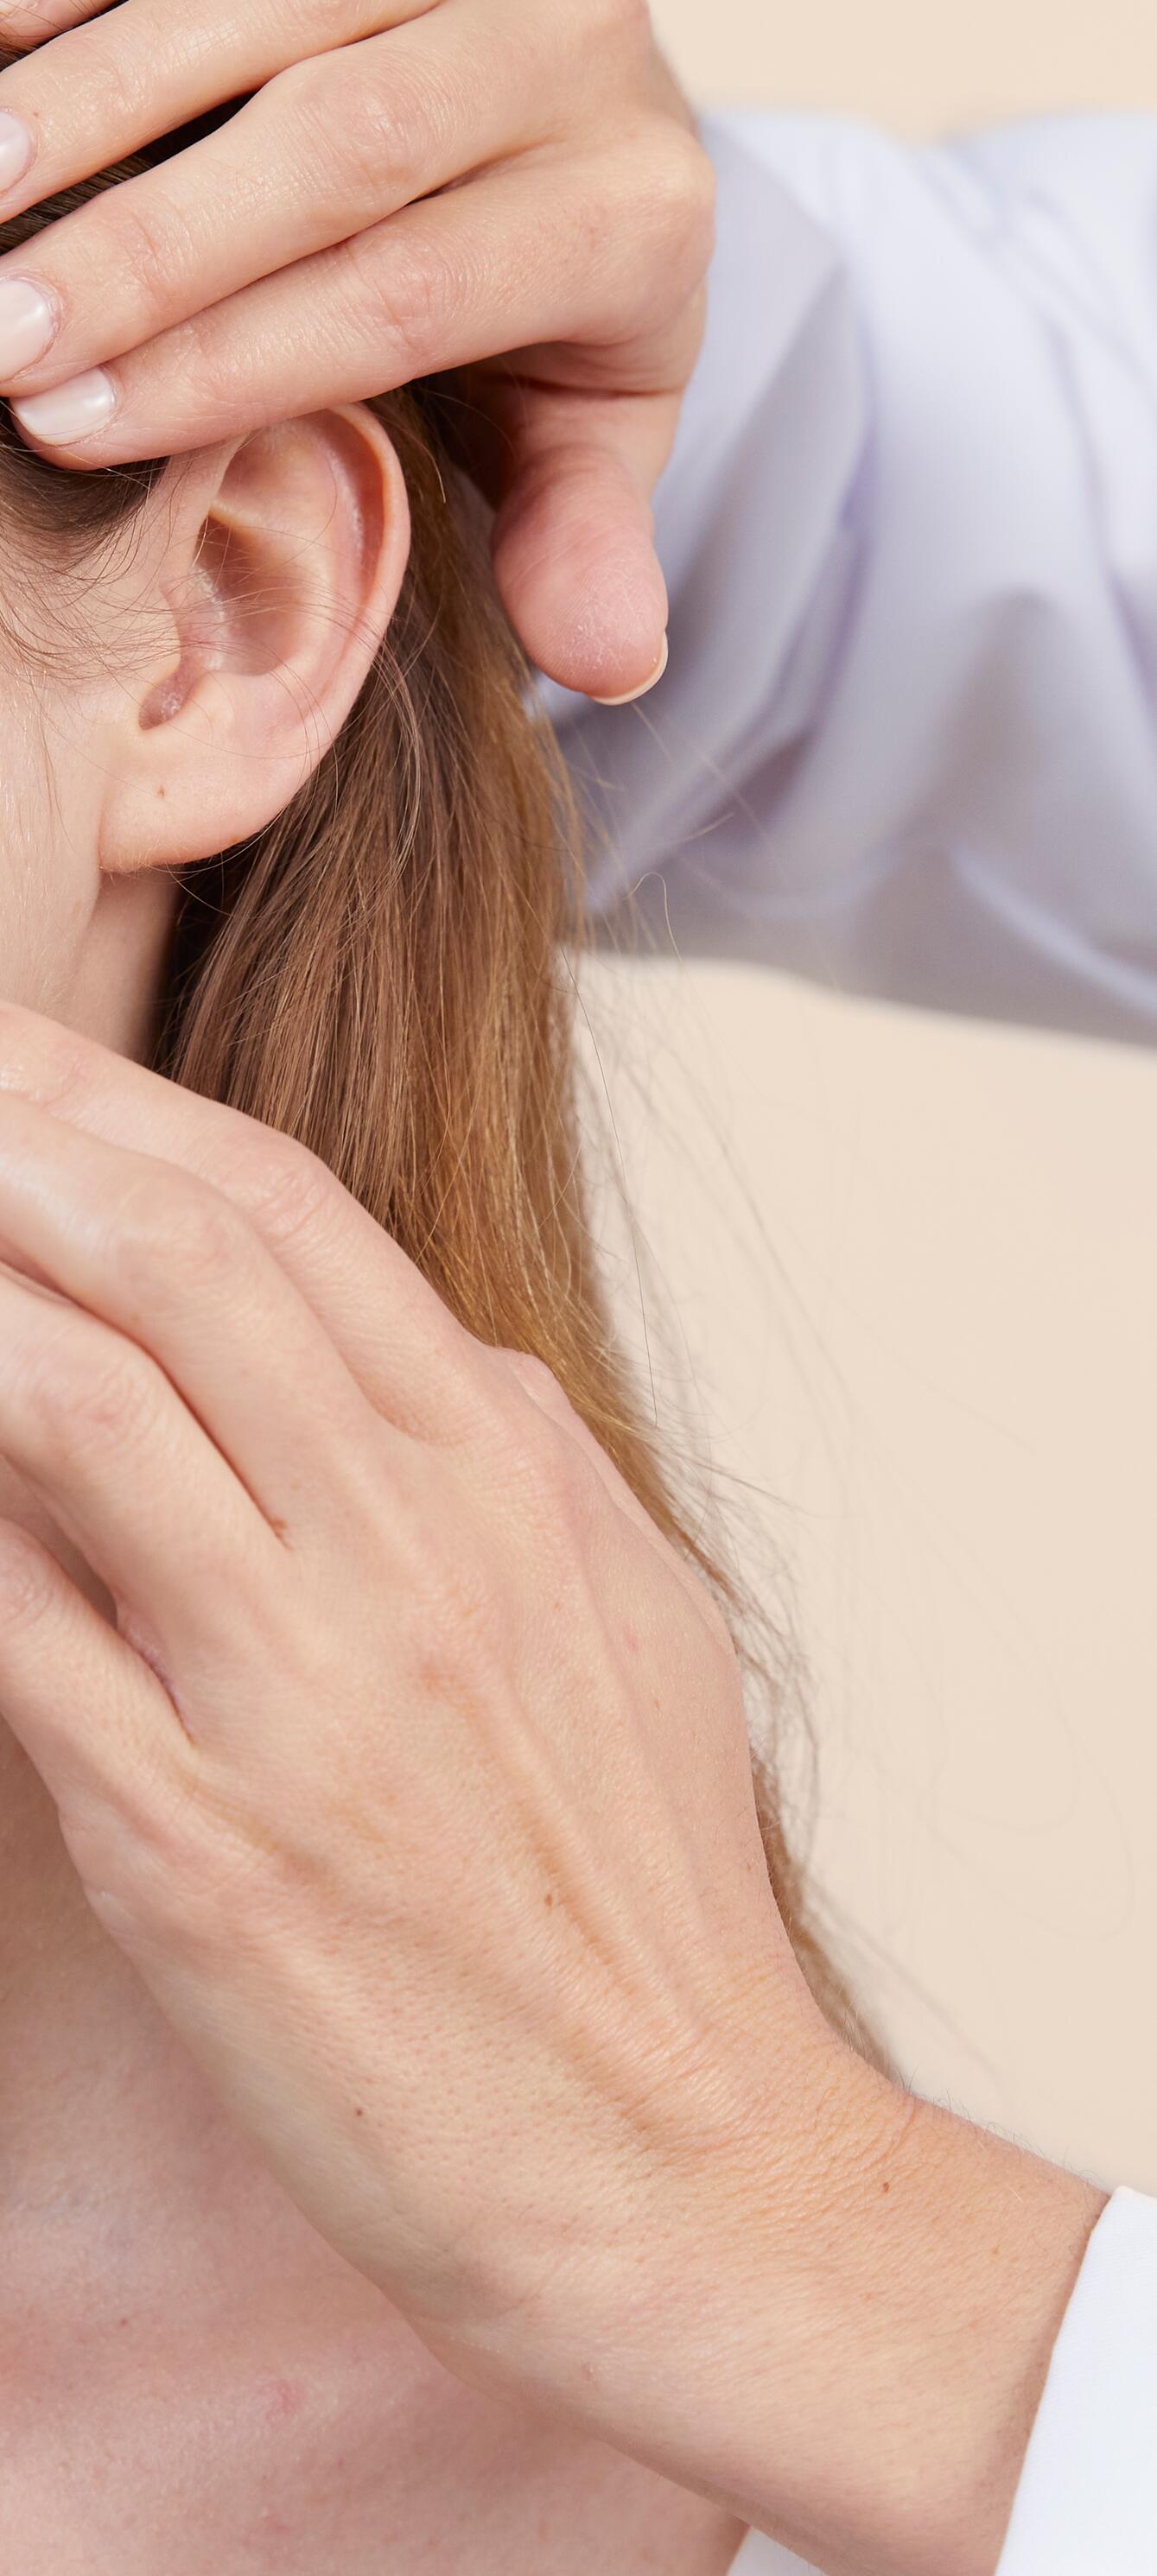 Eczema: how do I soothe my skin?